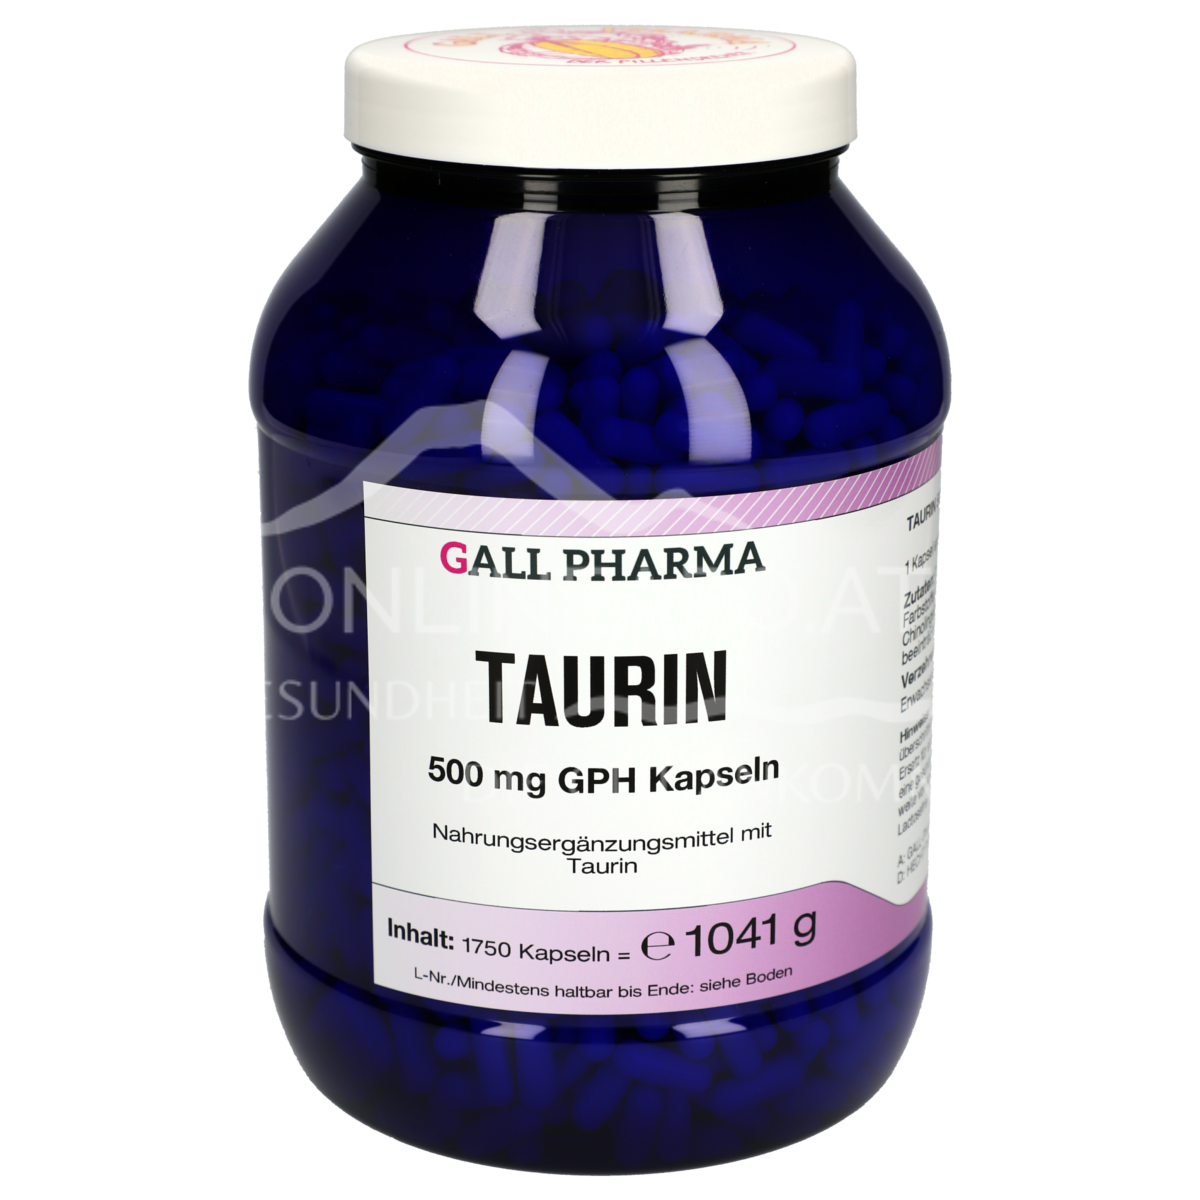 Gall Pharma Taurin 500 mg Kapseln